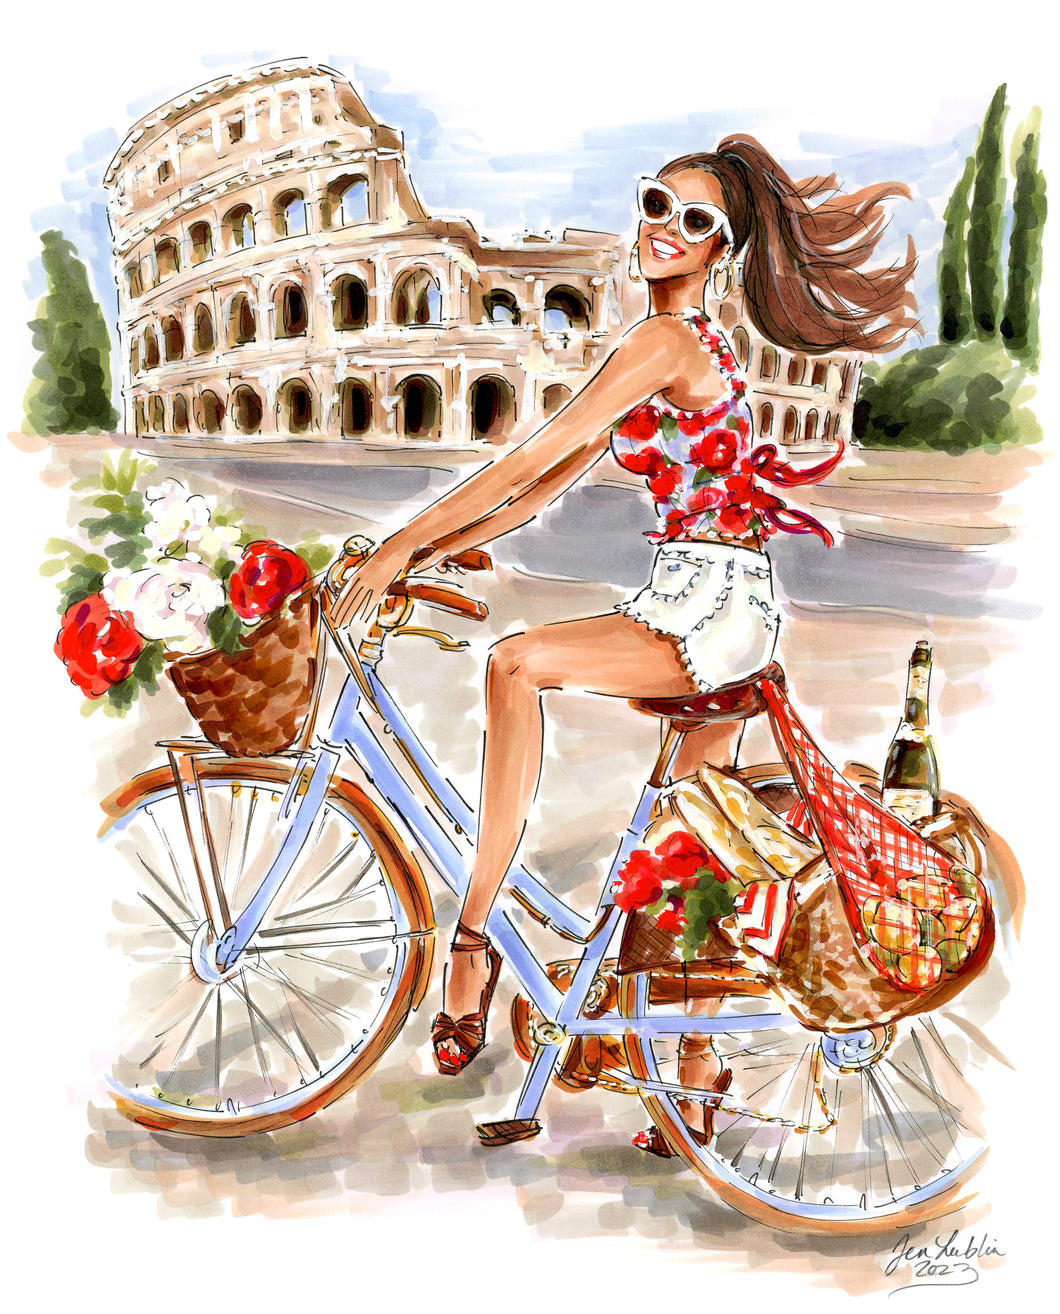 Biciclettas of Italy - Rome (Original Artwork)